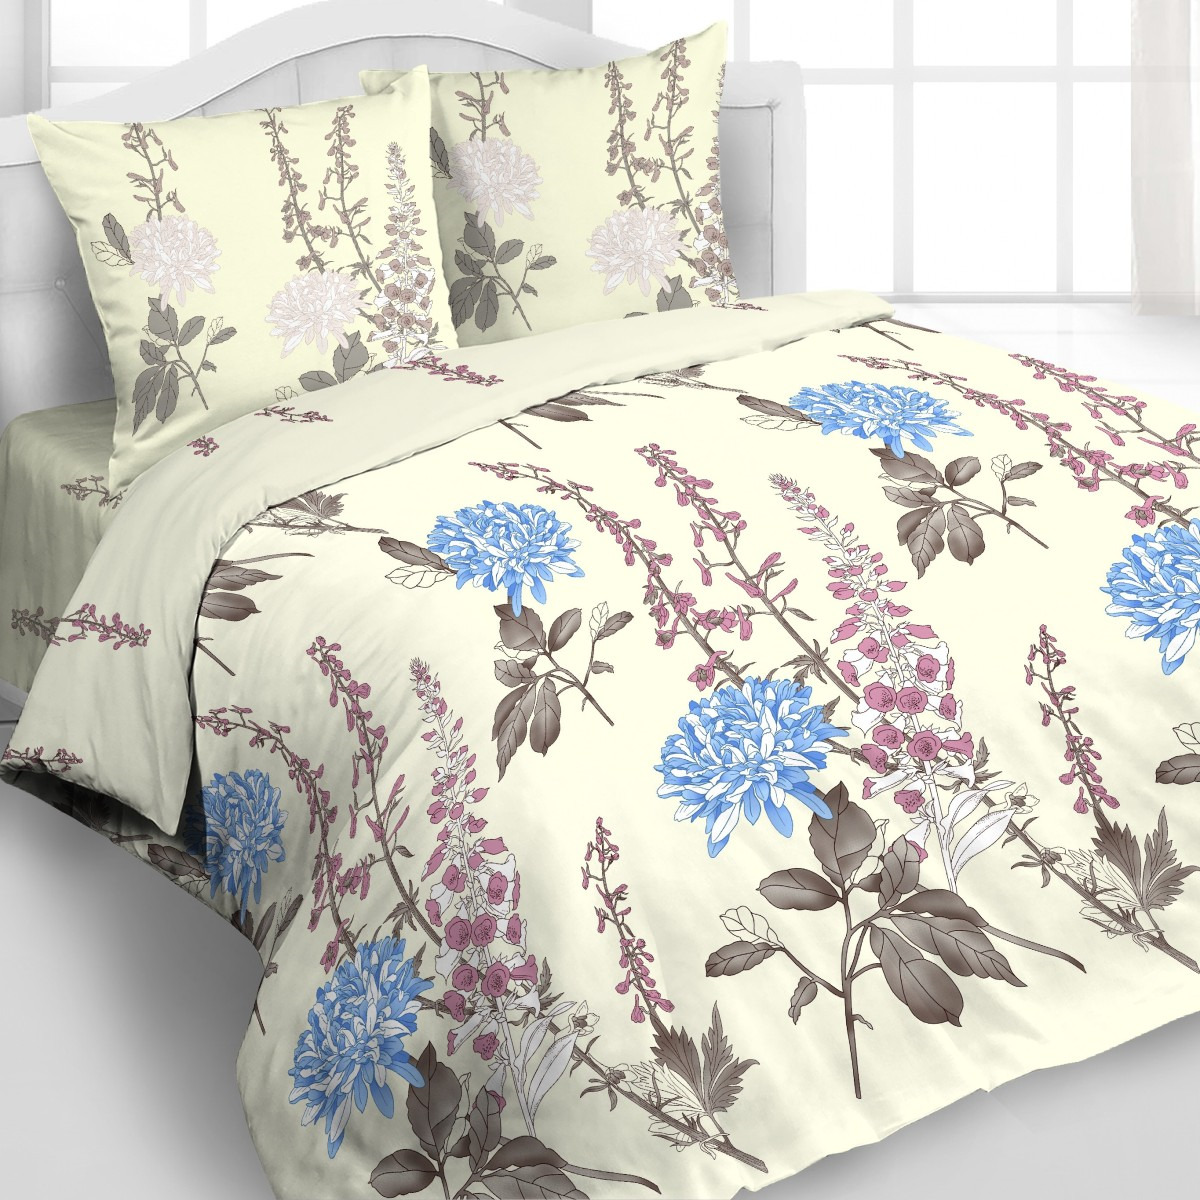 фото Комплект постельного белья Letto, B381-6, серый, евро, наволочки 70x70 Letto home textile